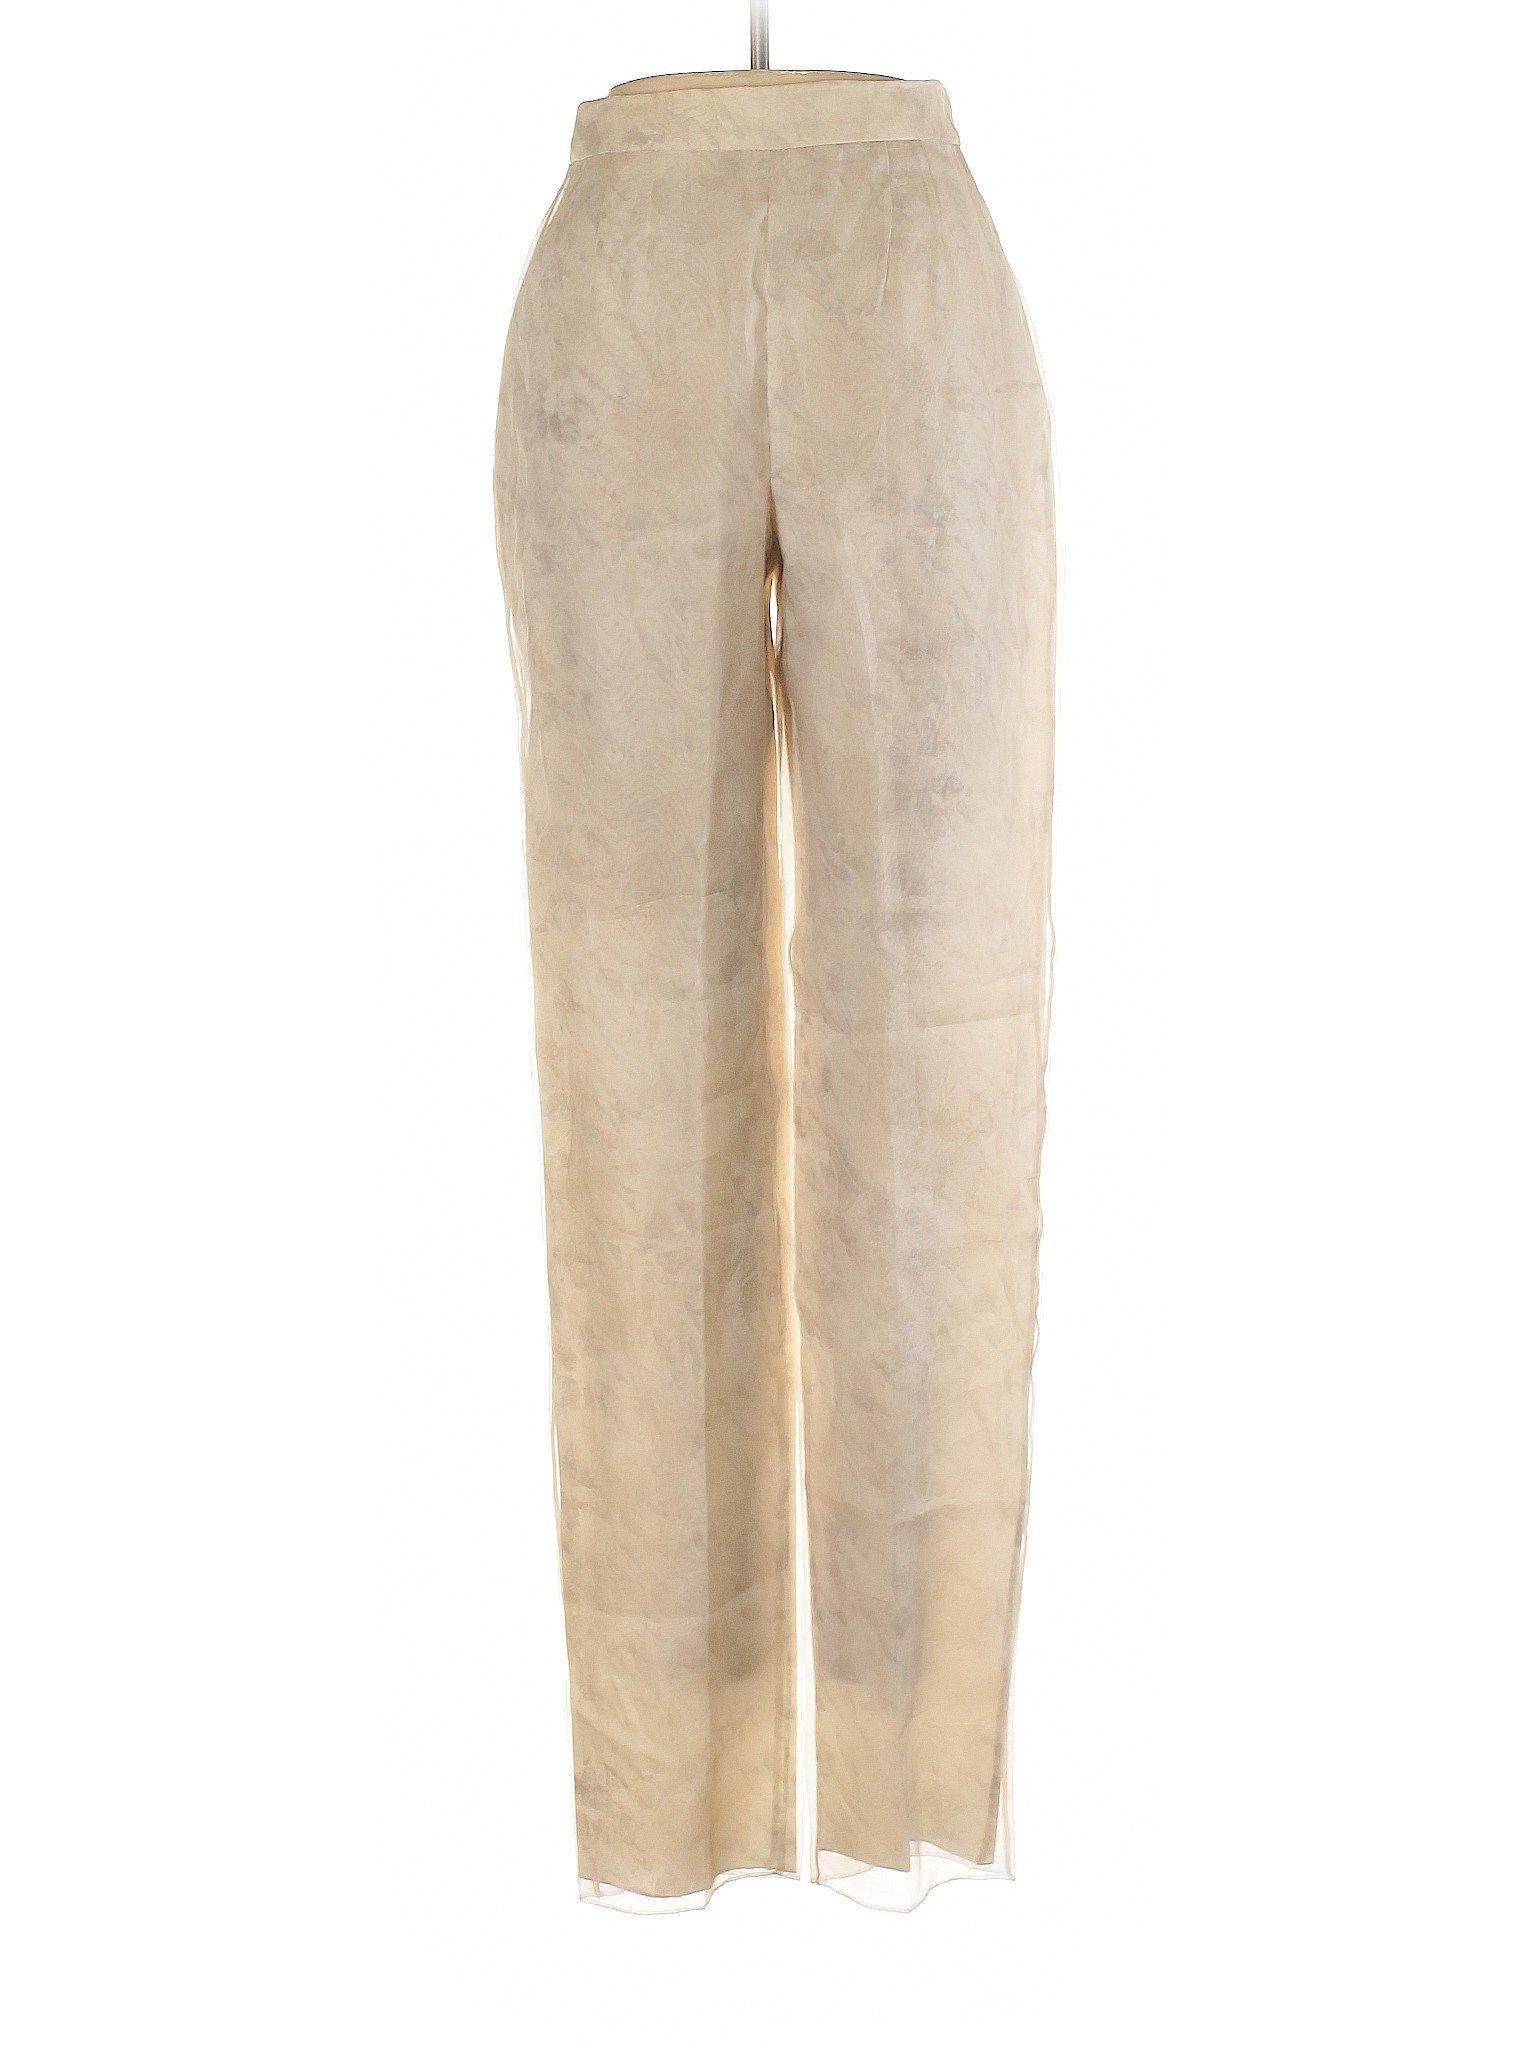 Giorgio Armani 100% Silk Print Ivory Silk Pants Size 40 (IT) - 95% off ...